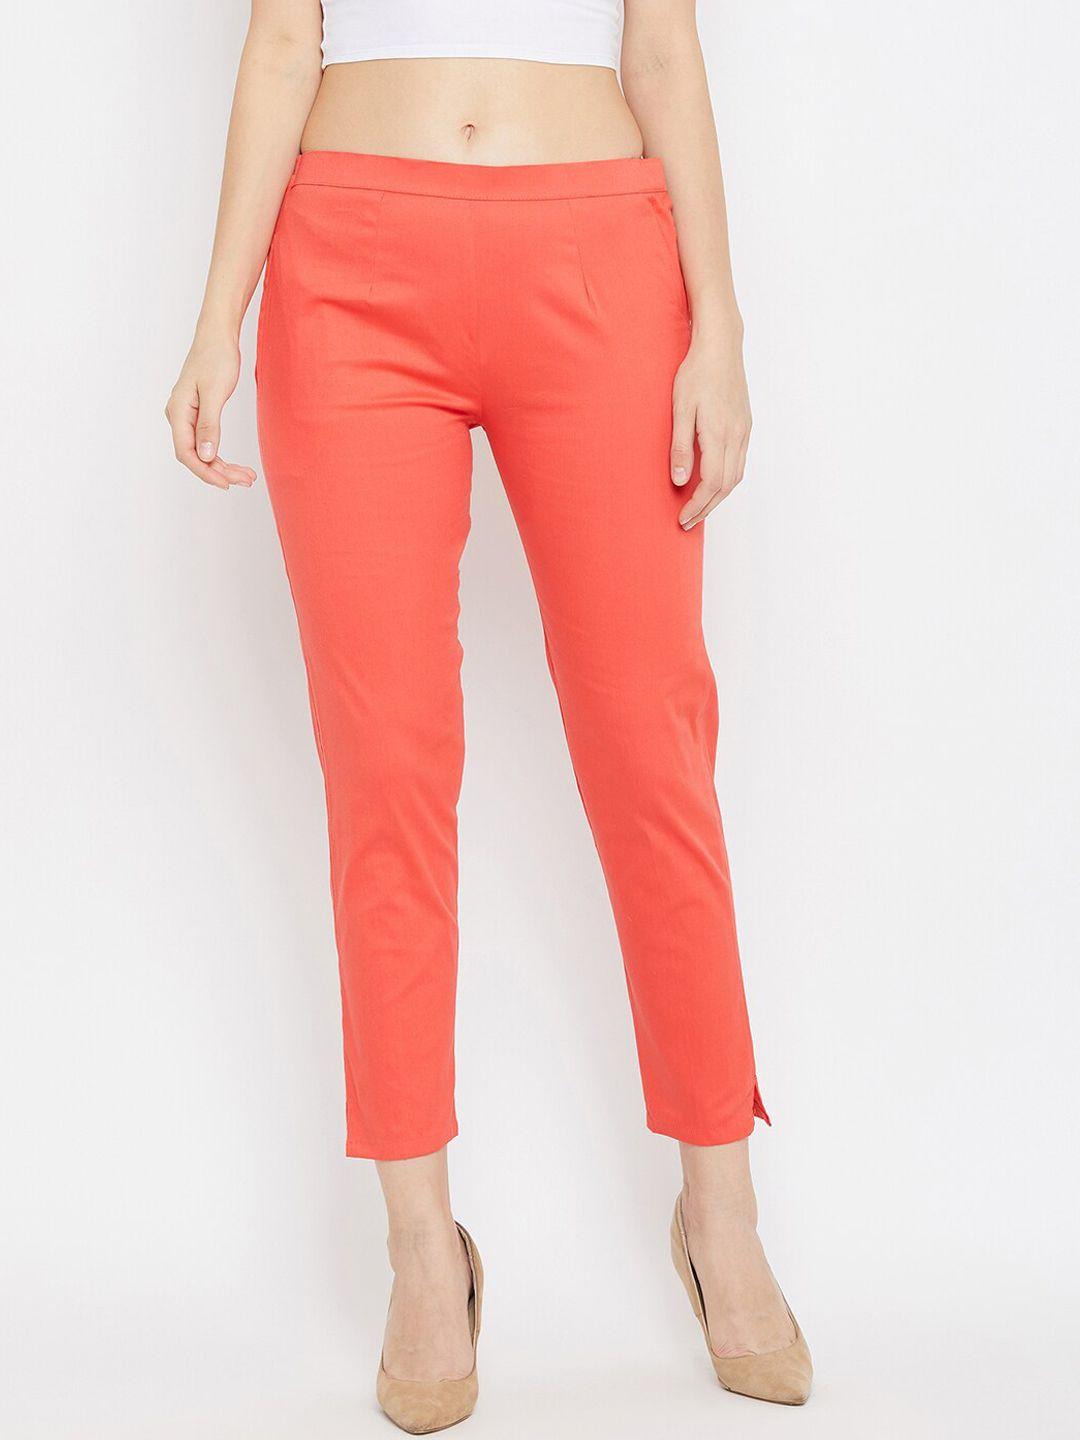 clora women peach-coloured regular fit solid cigarette trousers